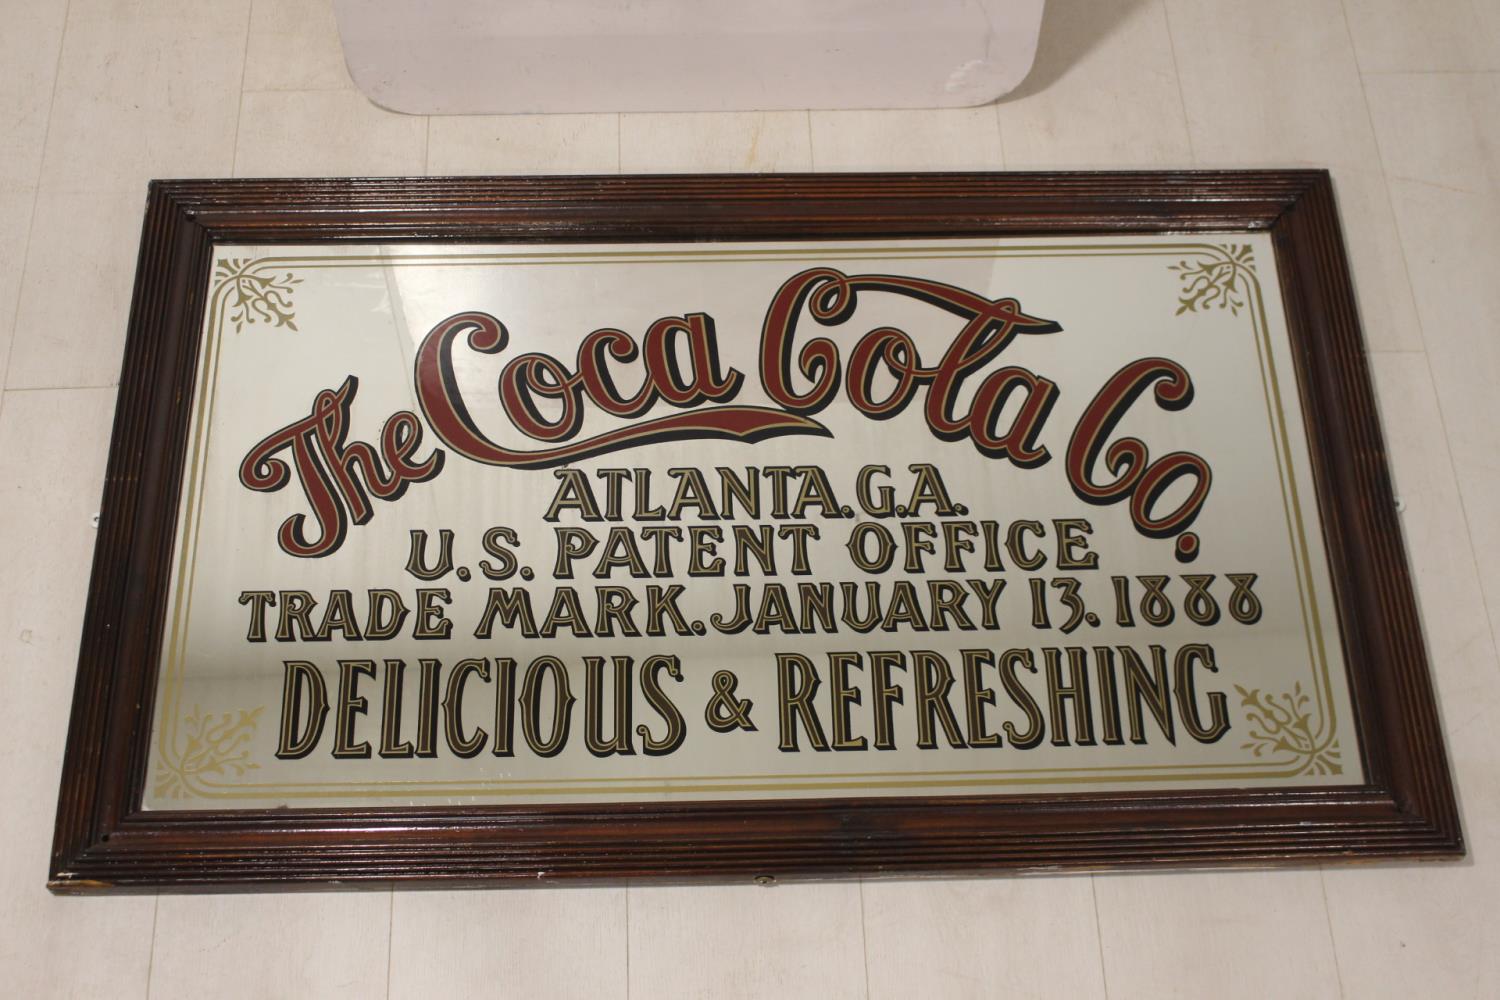 The Coca Cola Co. advertising mirror.